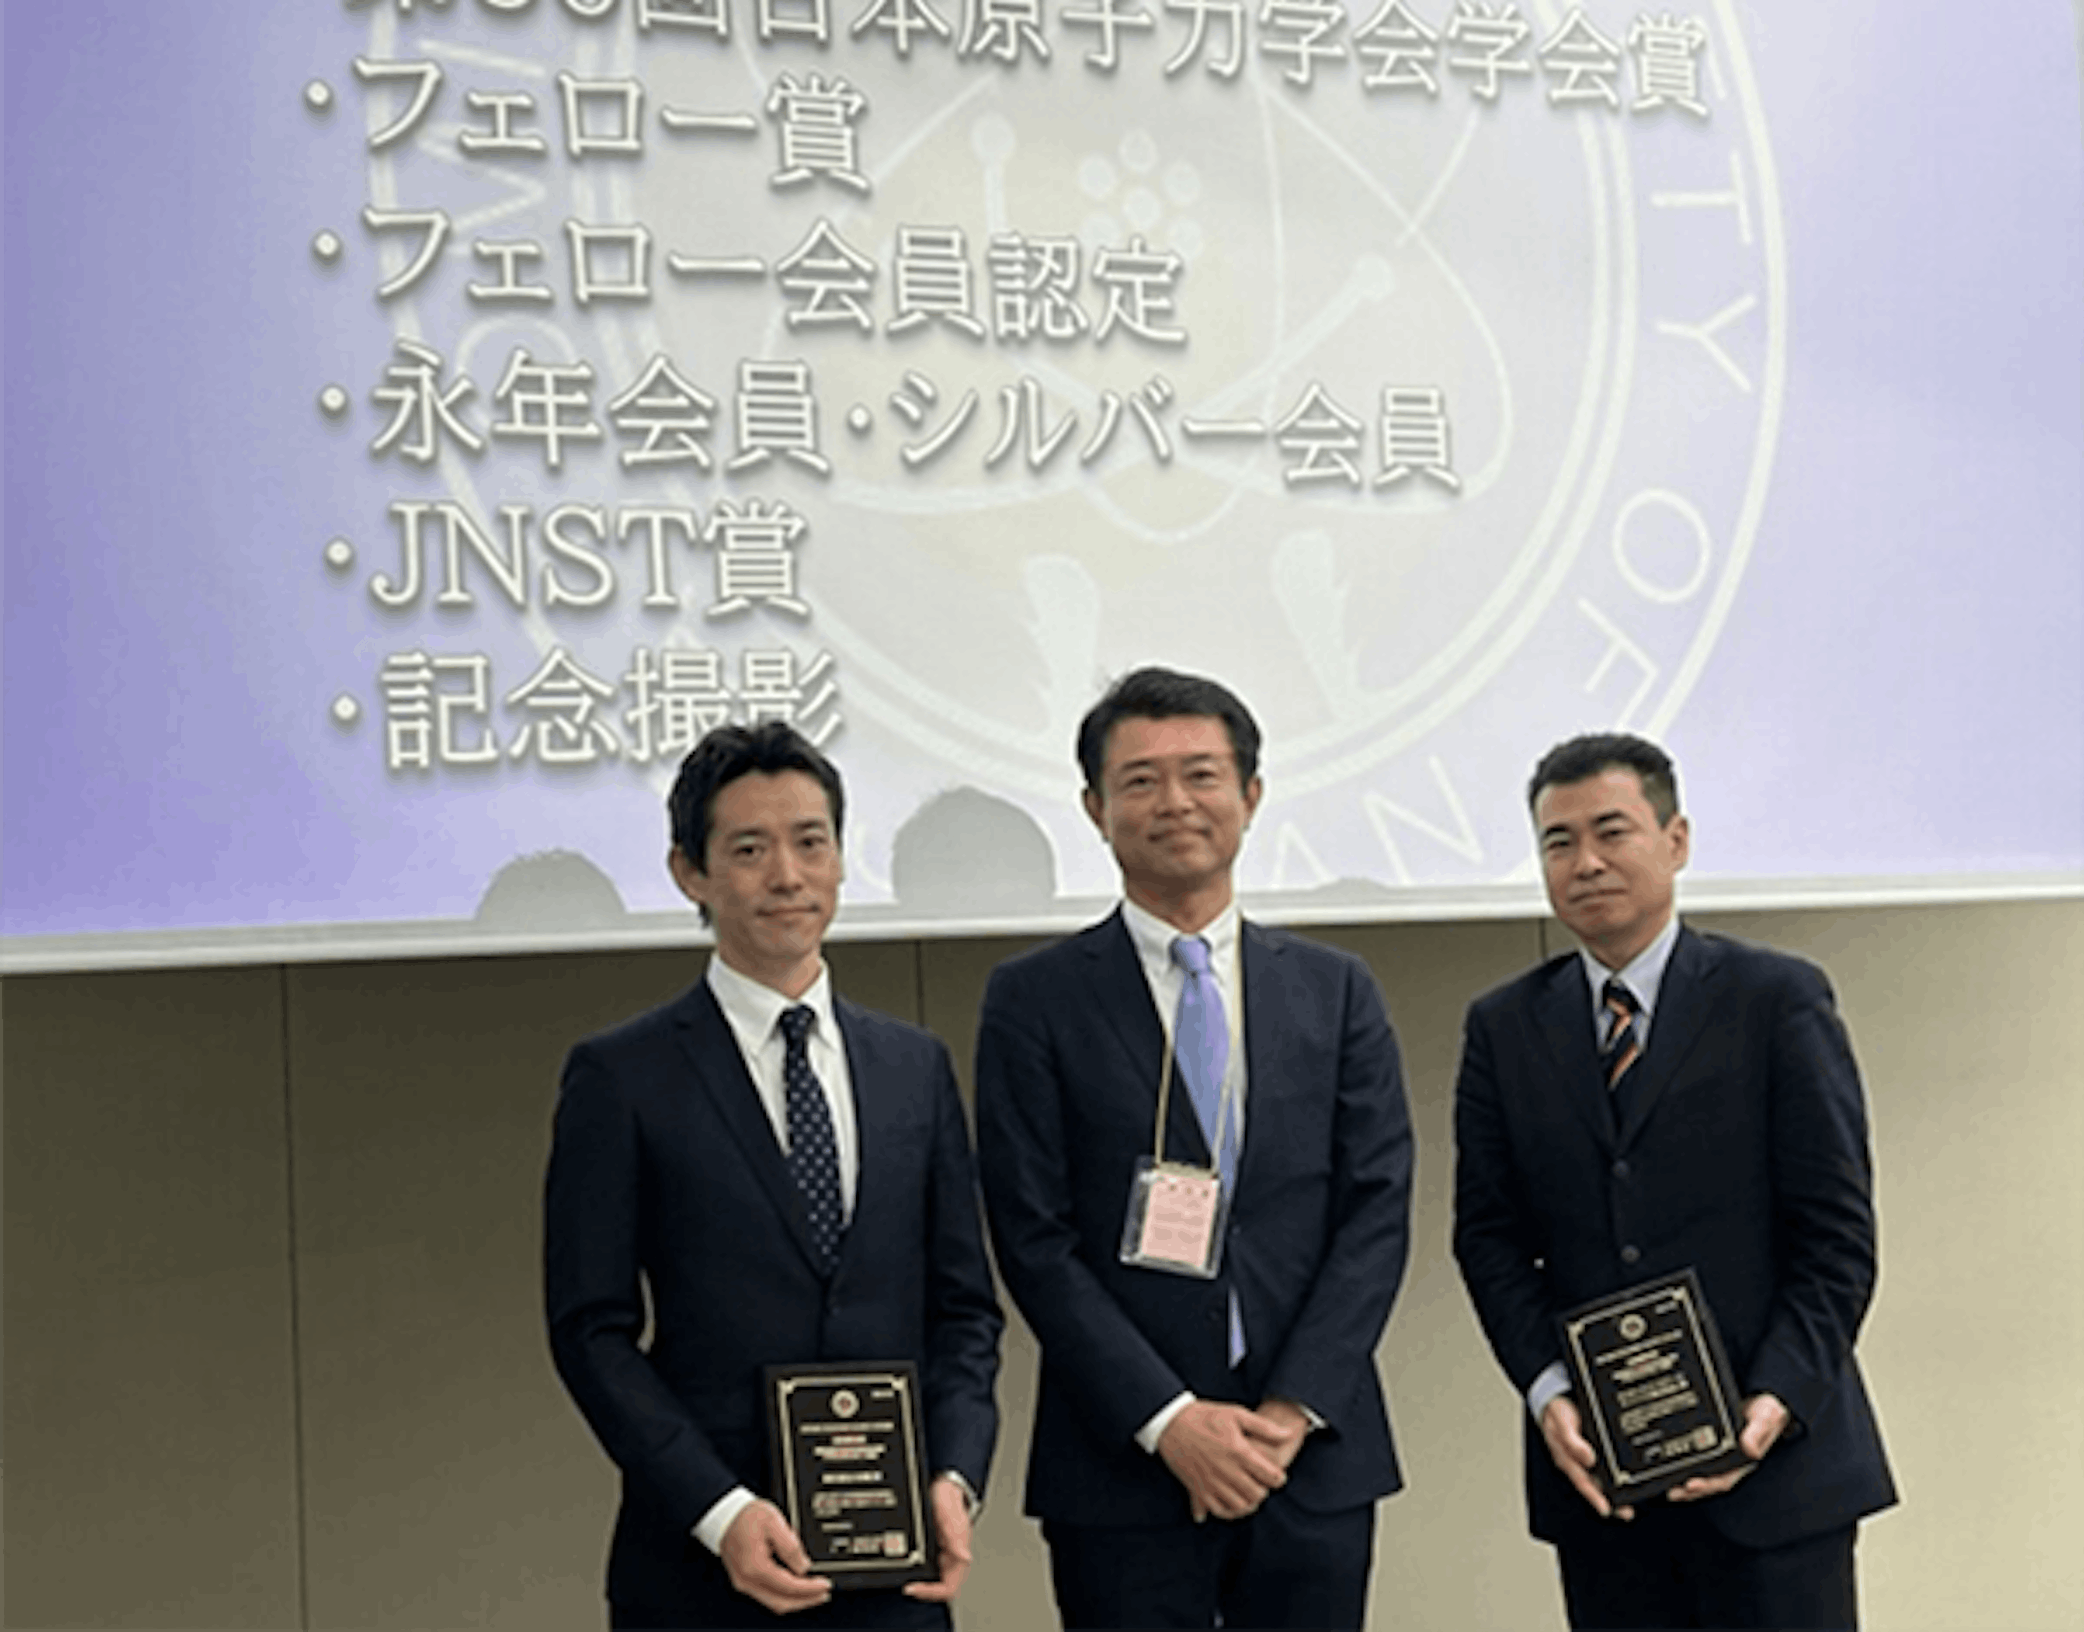 Atomic energy society of japan award photo 2 article